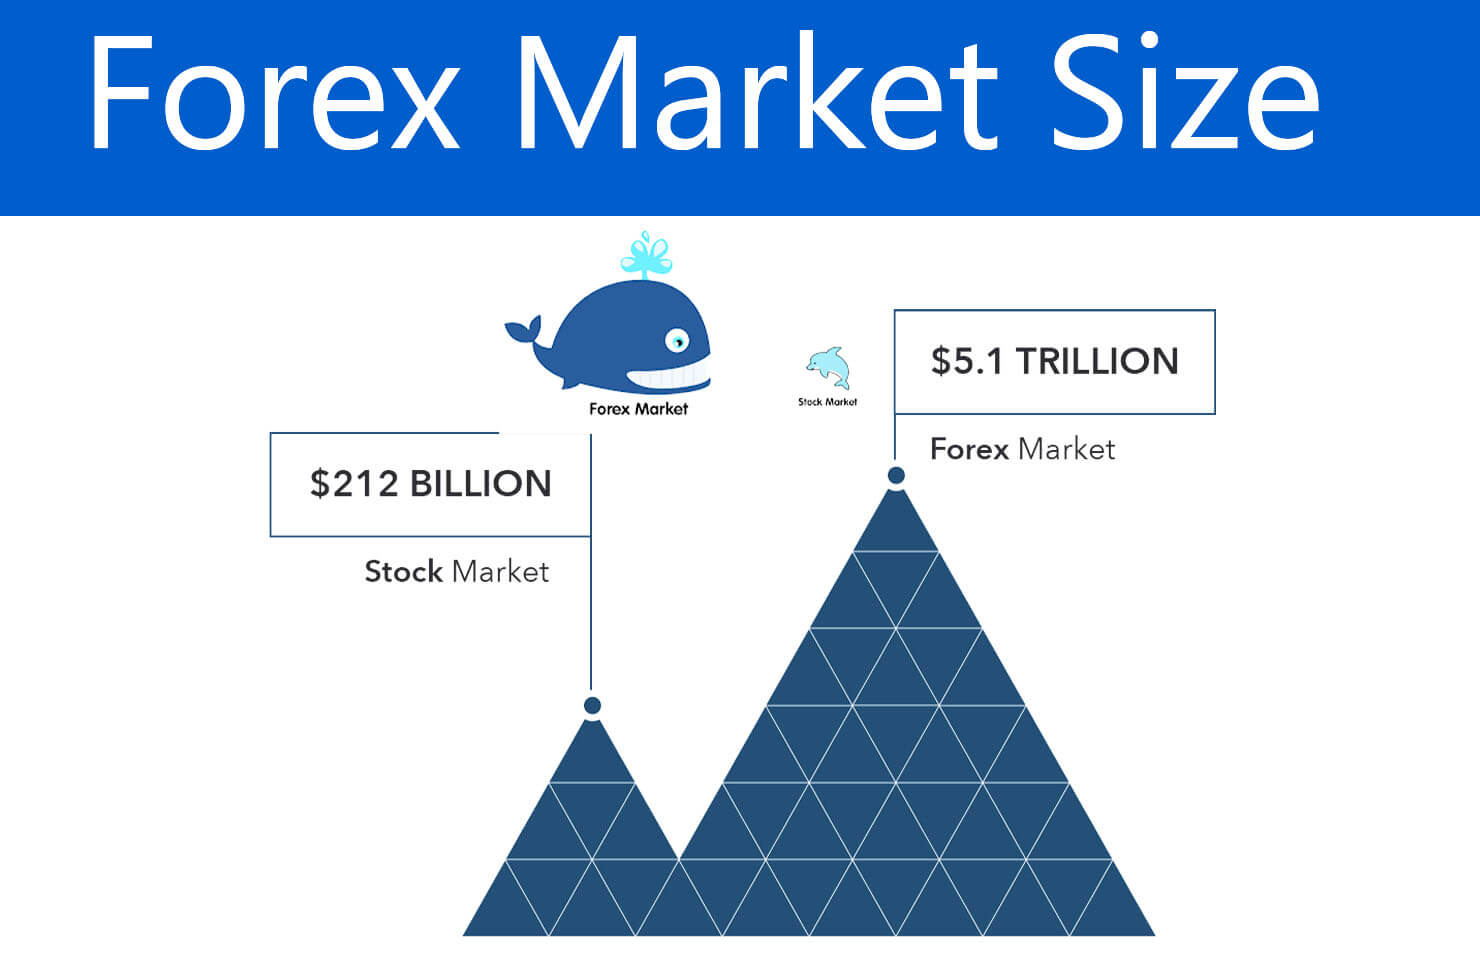 Forex market size, volume, and liquidity